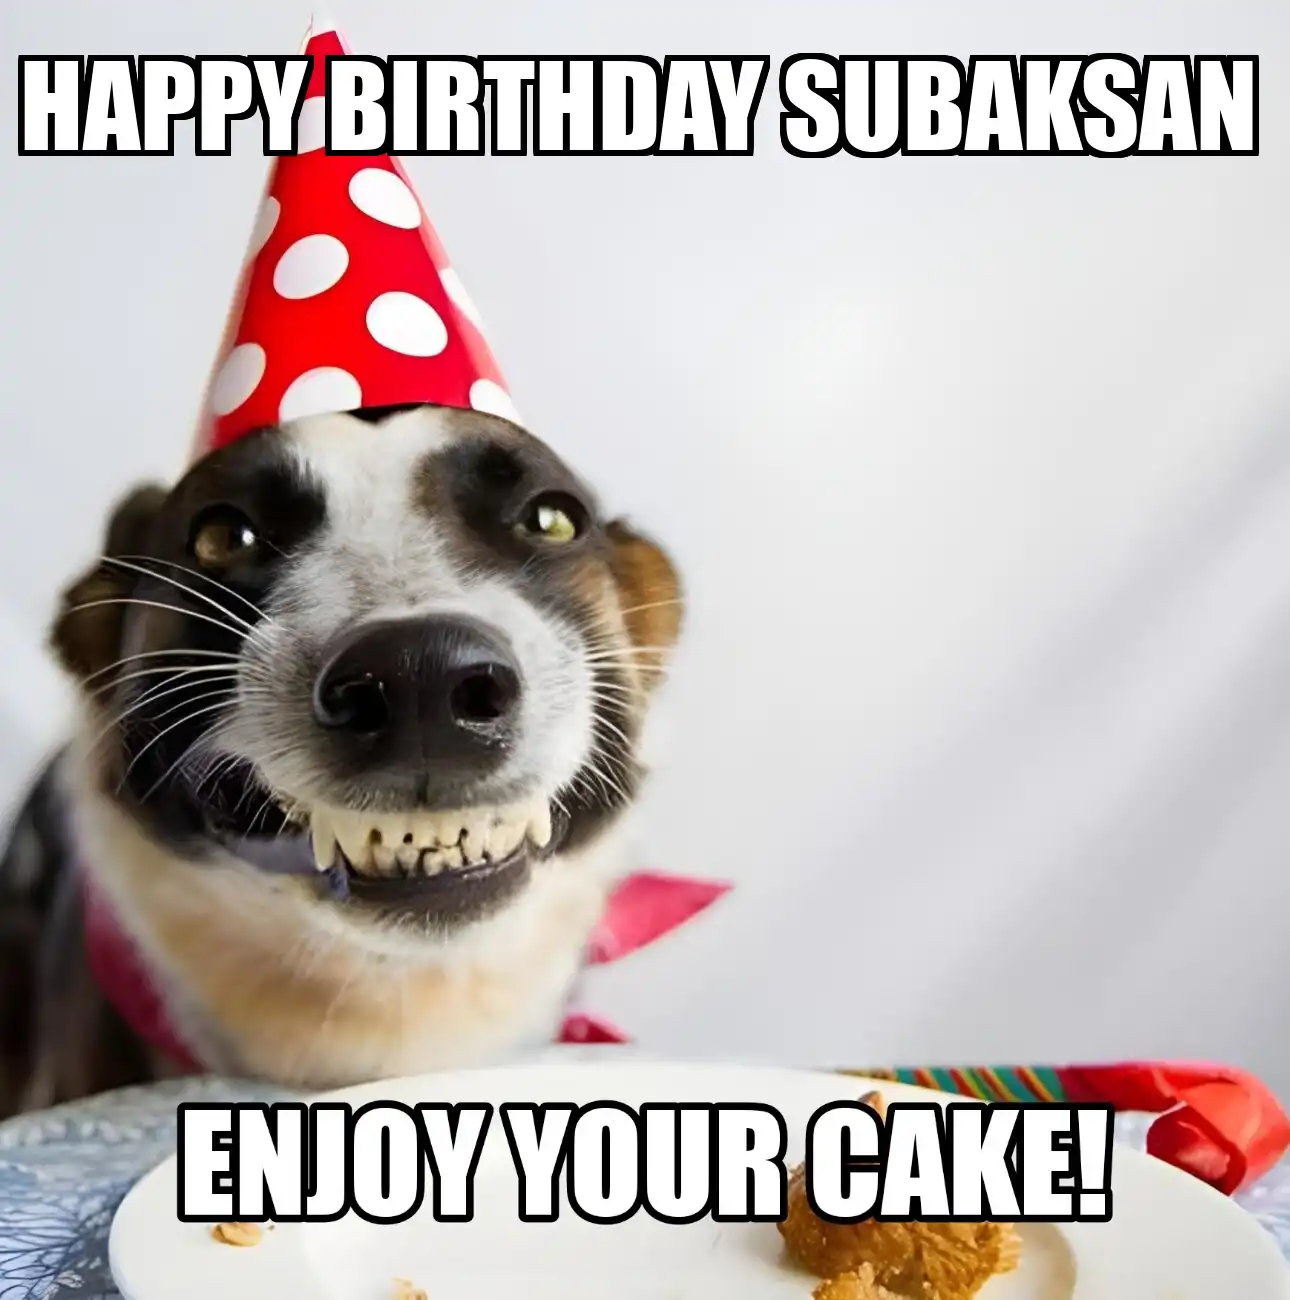 Happy Birthday Subaksan Enjoy Your Cake Dog Meme